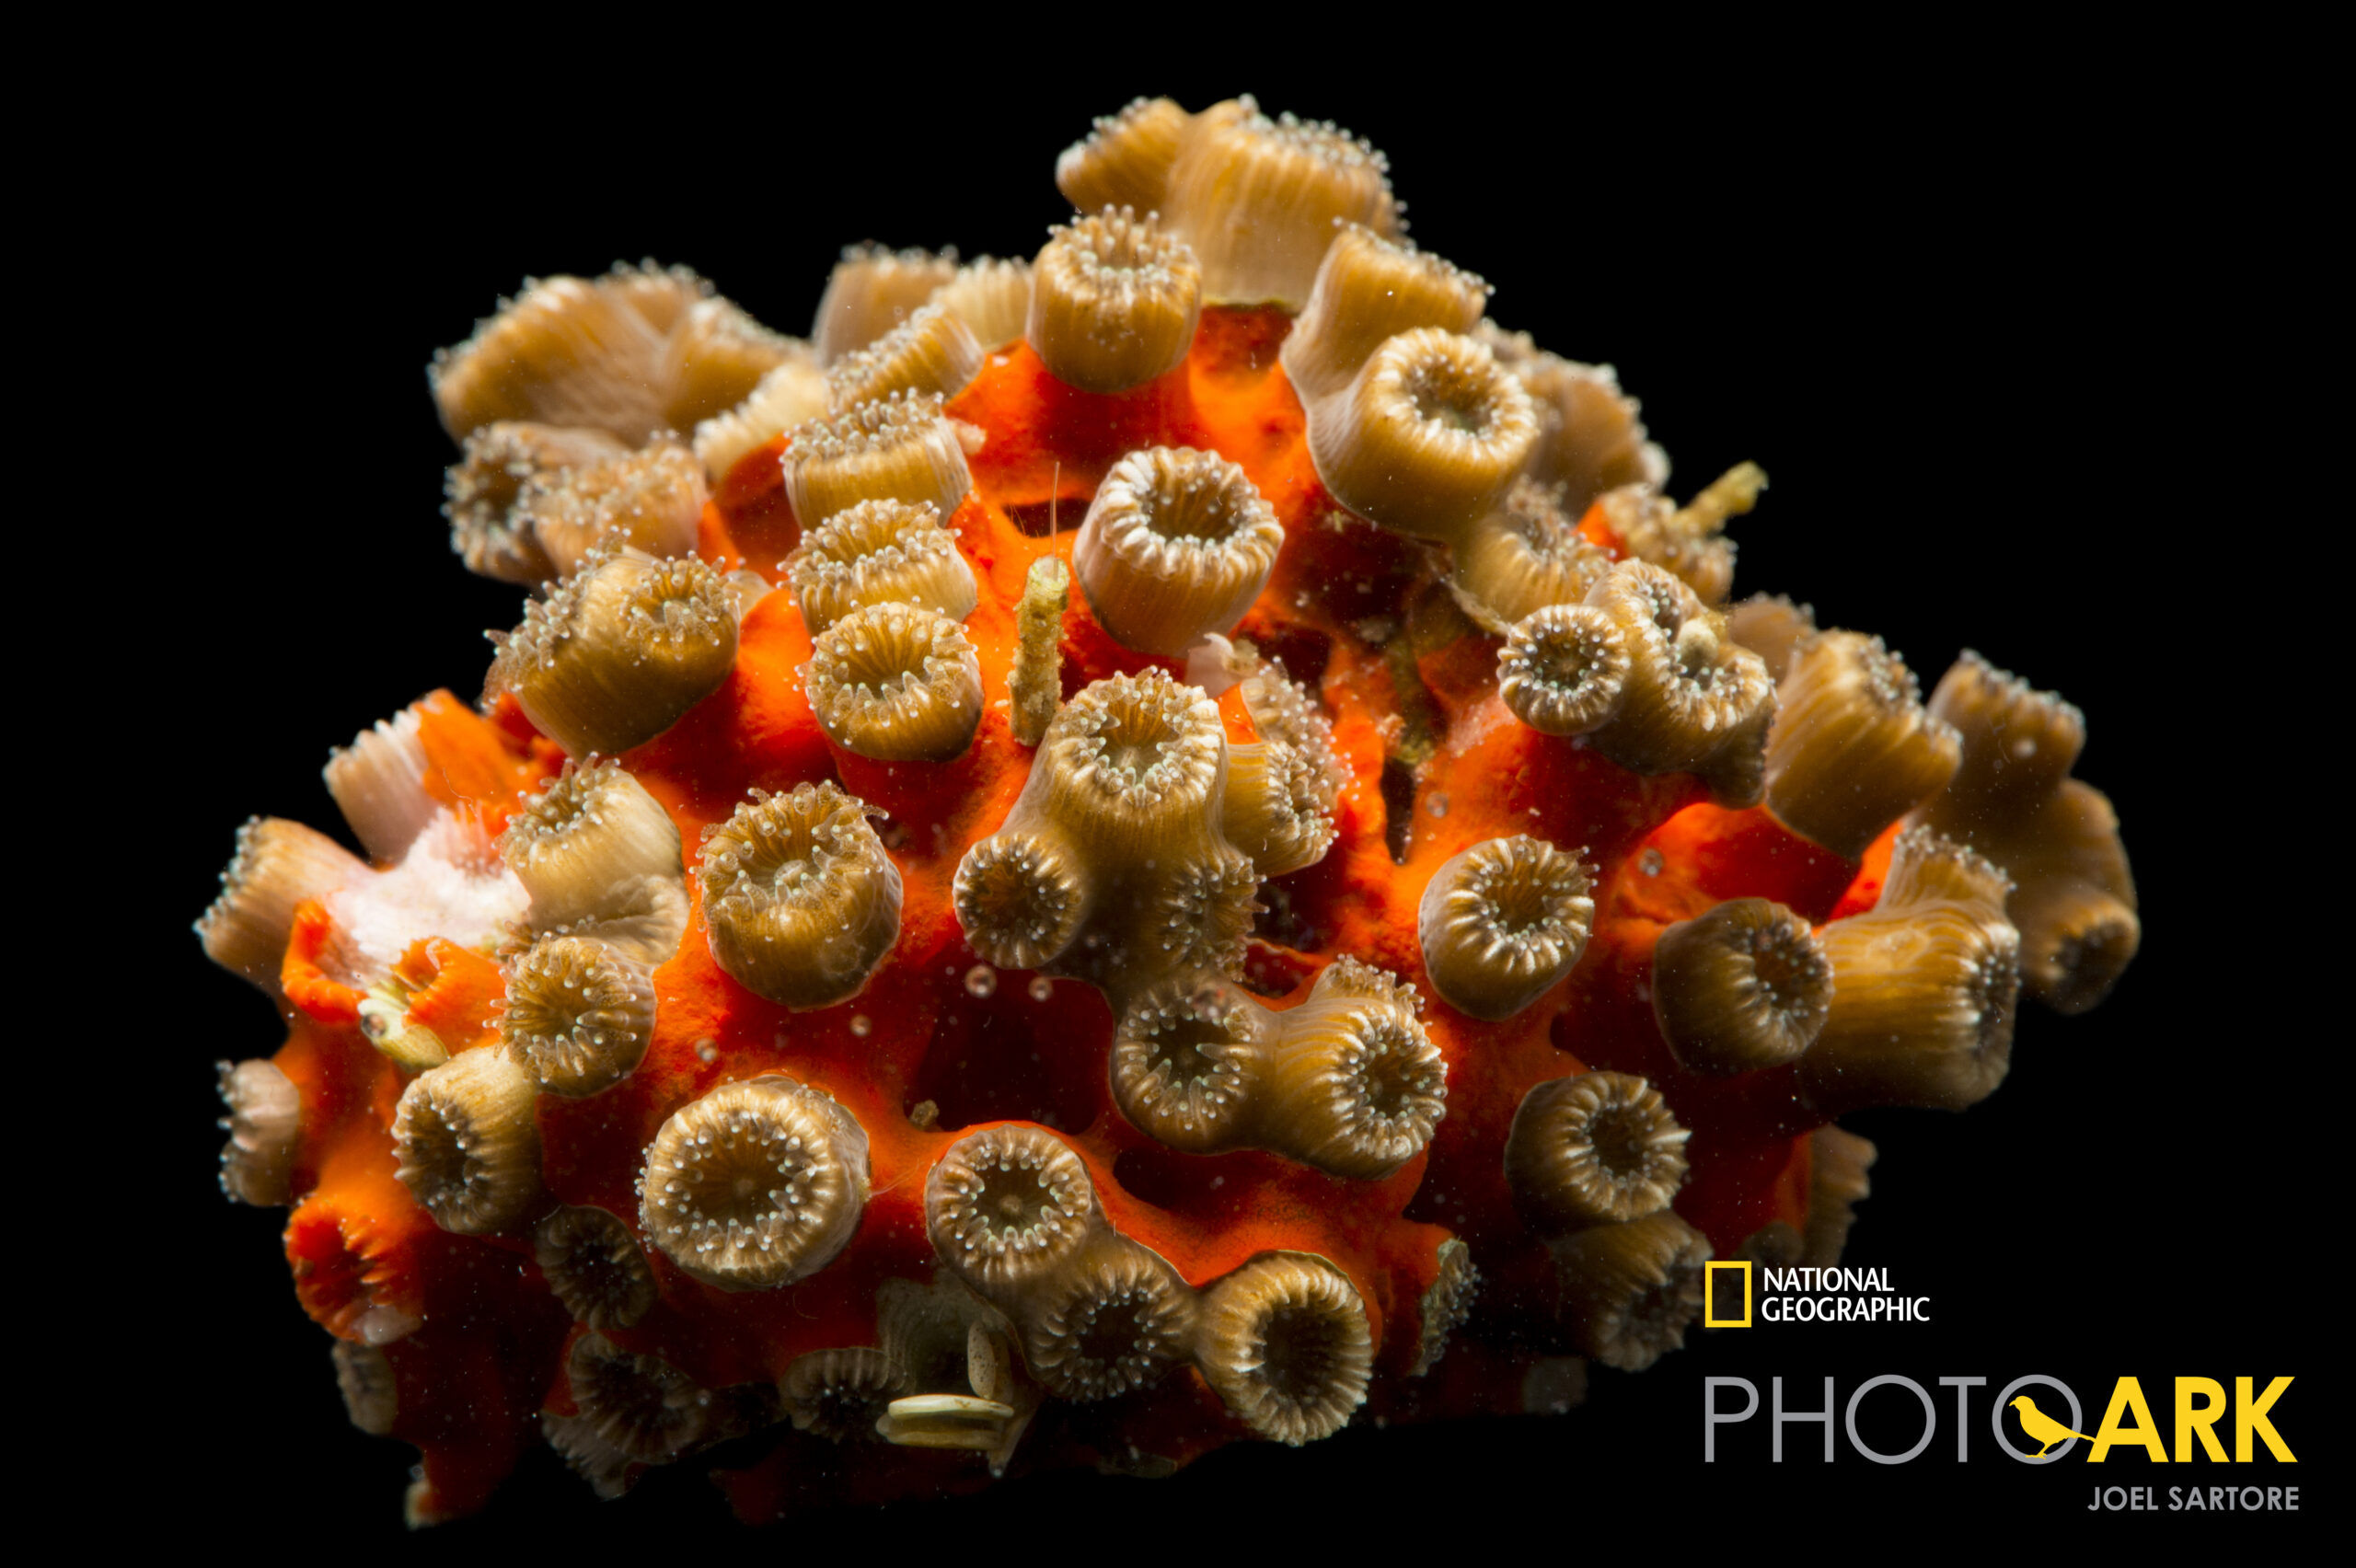 Red shell coral (Cladocora arbuscula) at Gulf Specimen in Panacea, FL.